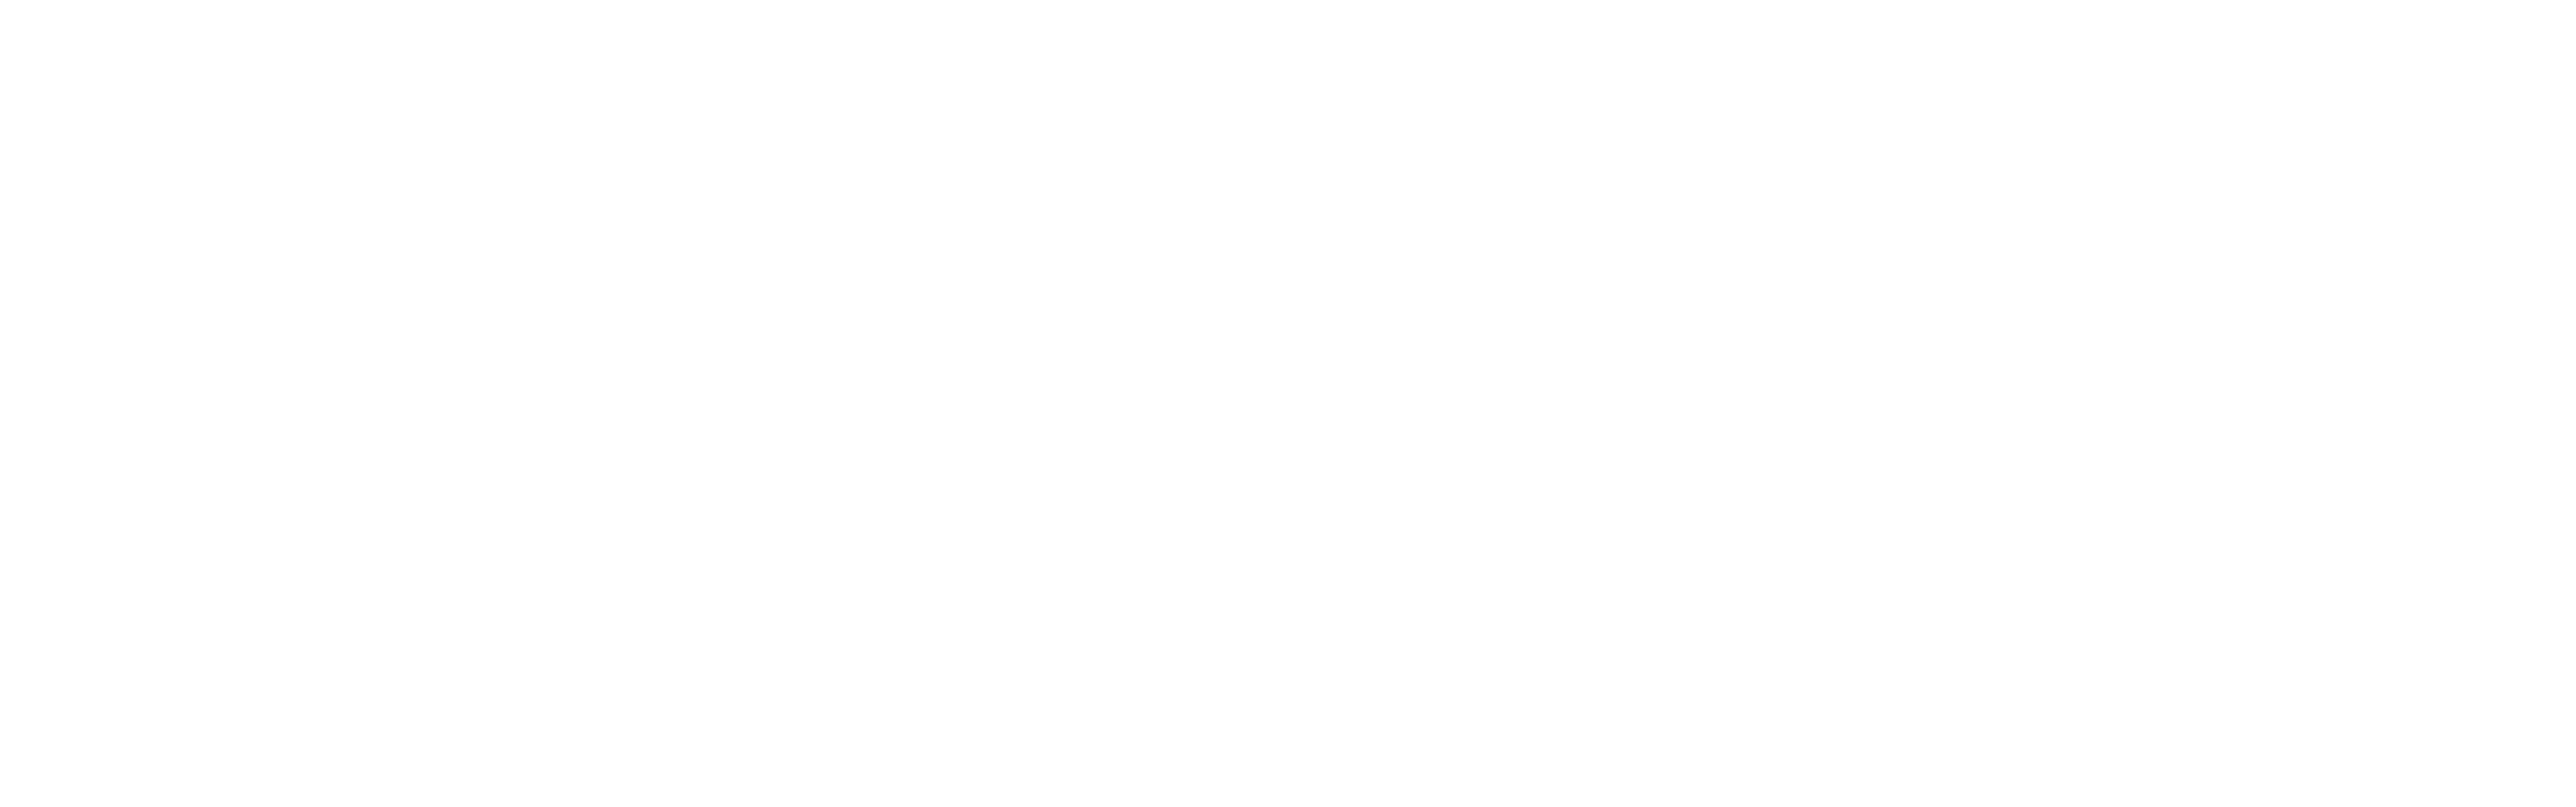 AxisVM logo sec inv